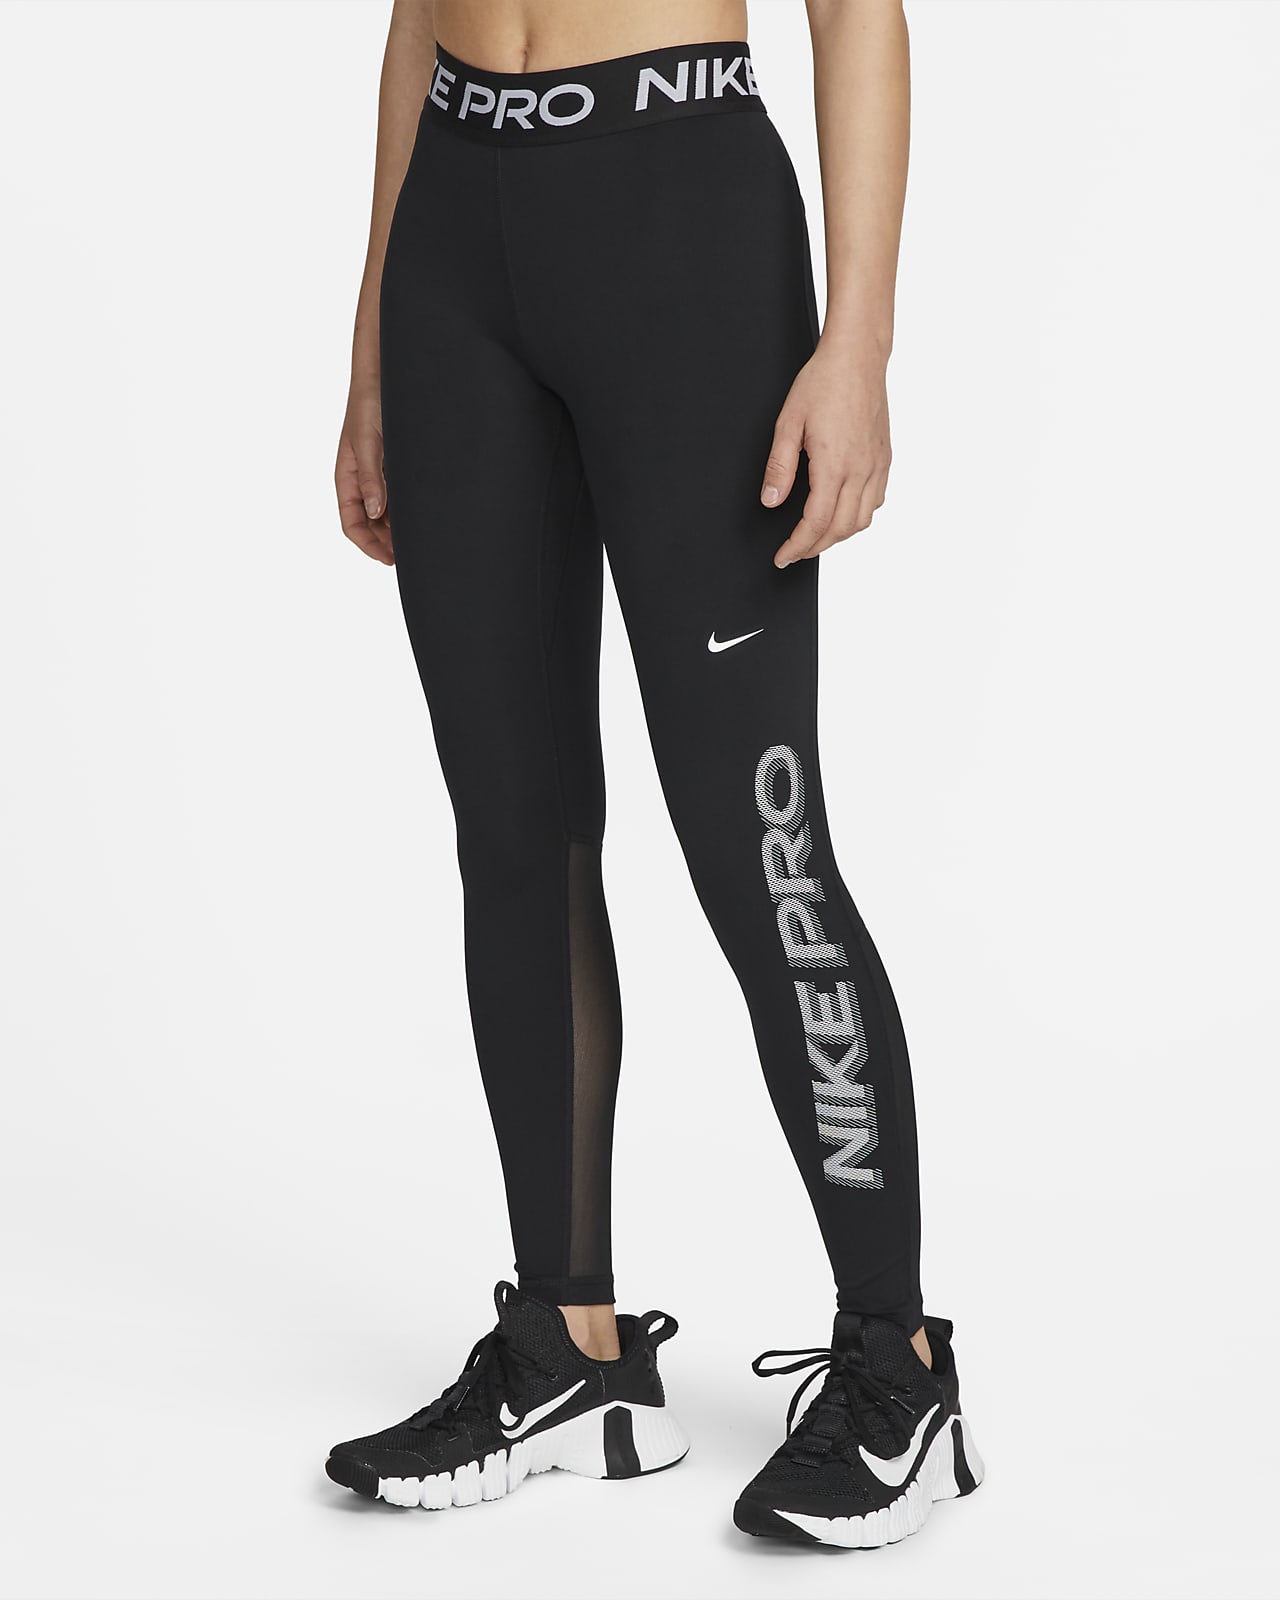 Comprar Mallas WMNS Nike Pro 365 Tights para mujer